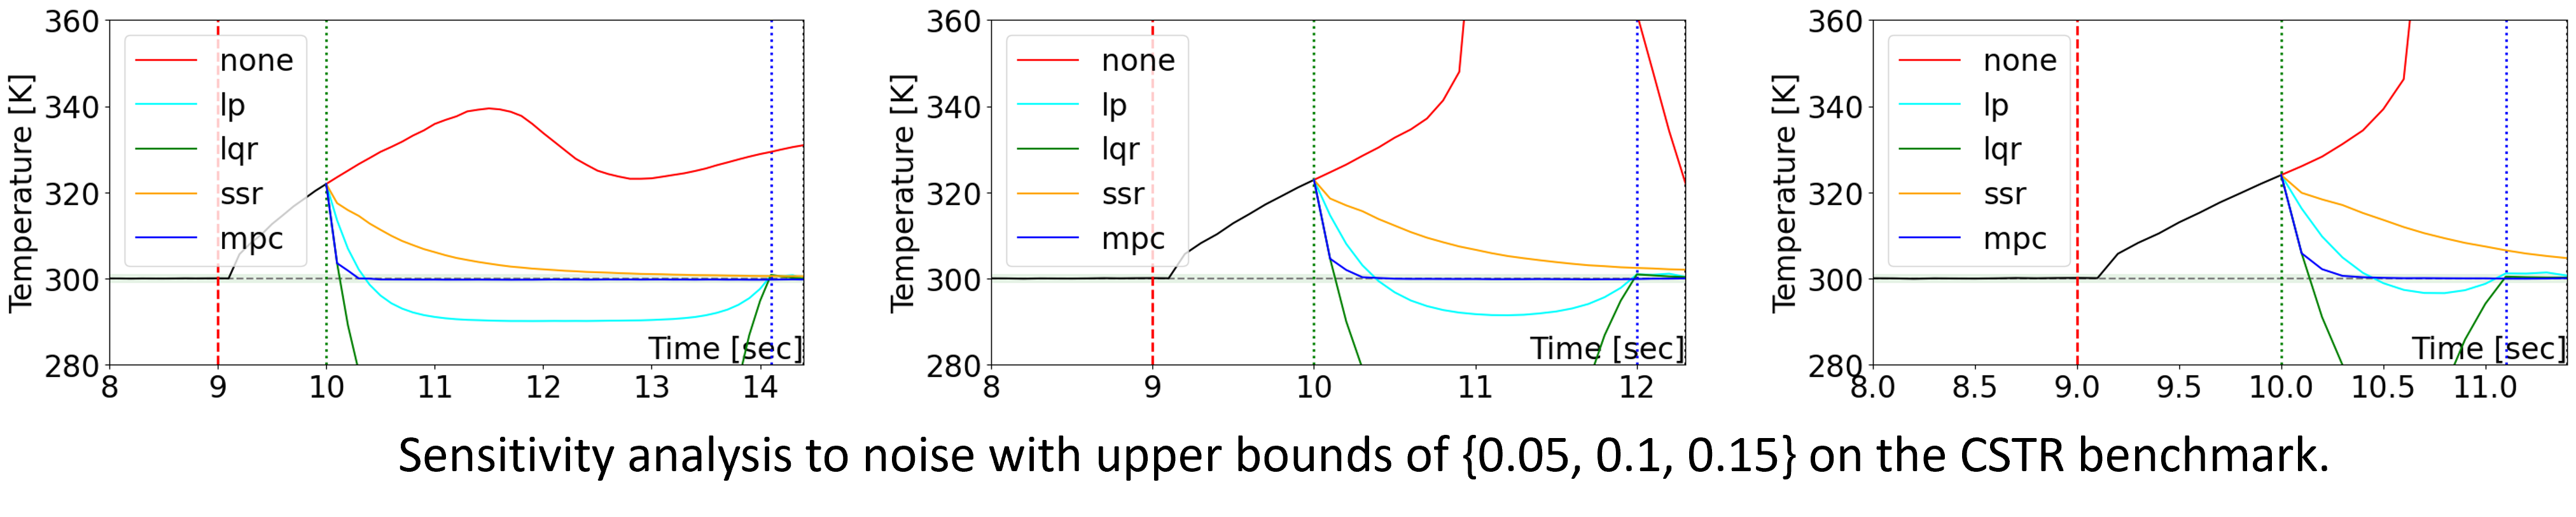 Sensitivity analysis to noise on CSTR benchmark